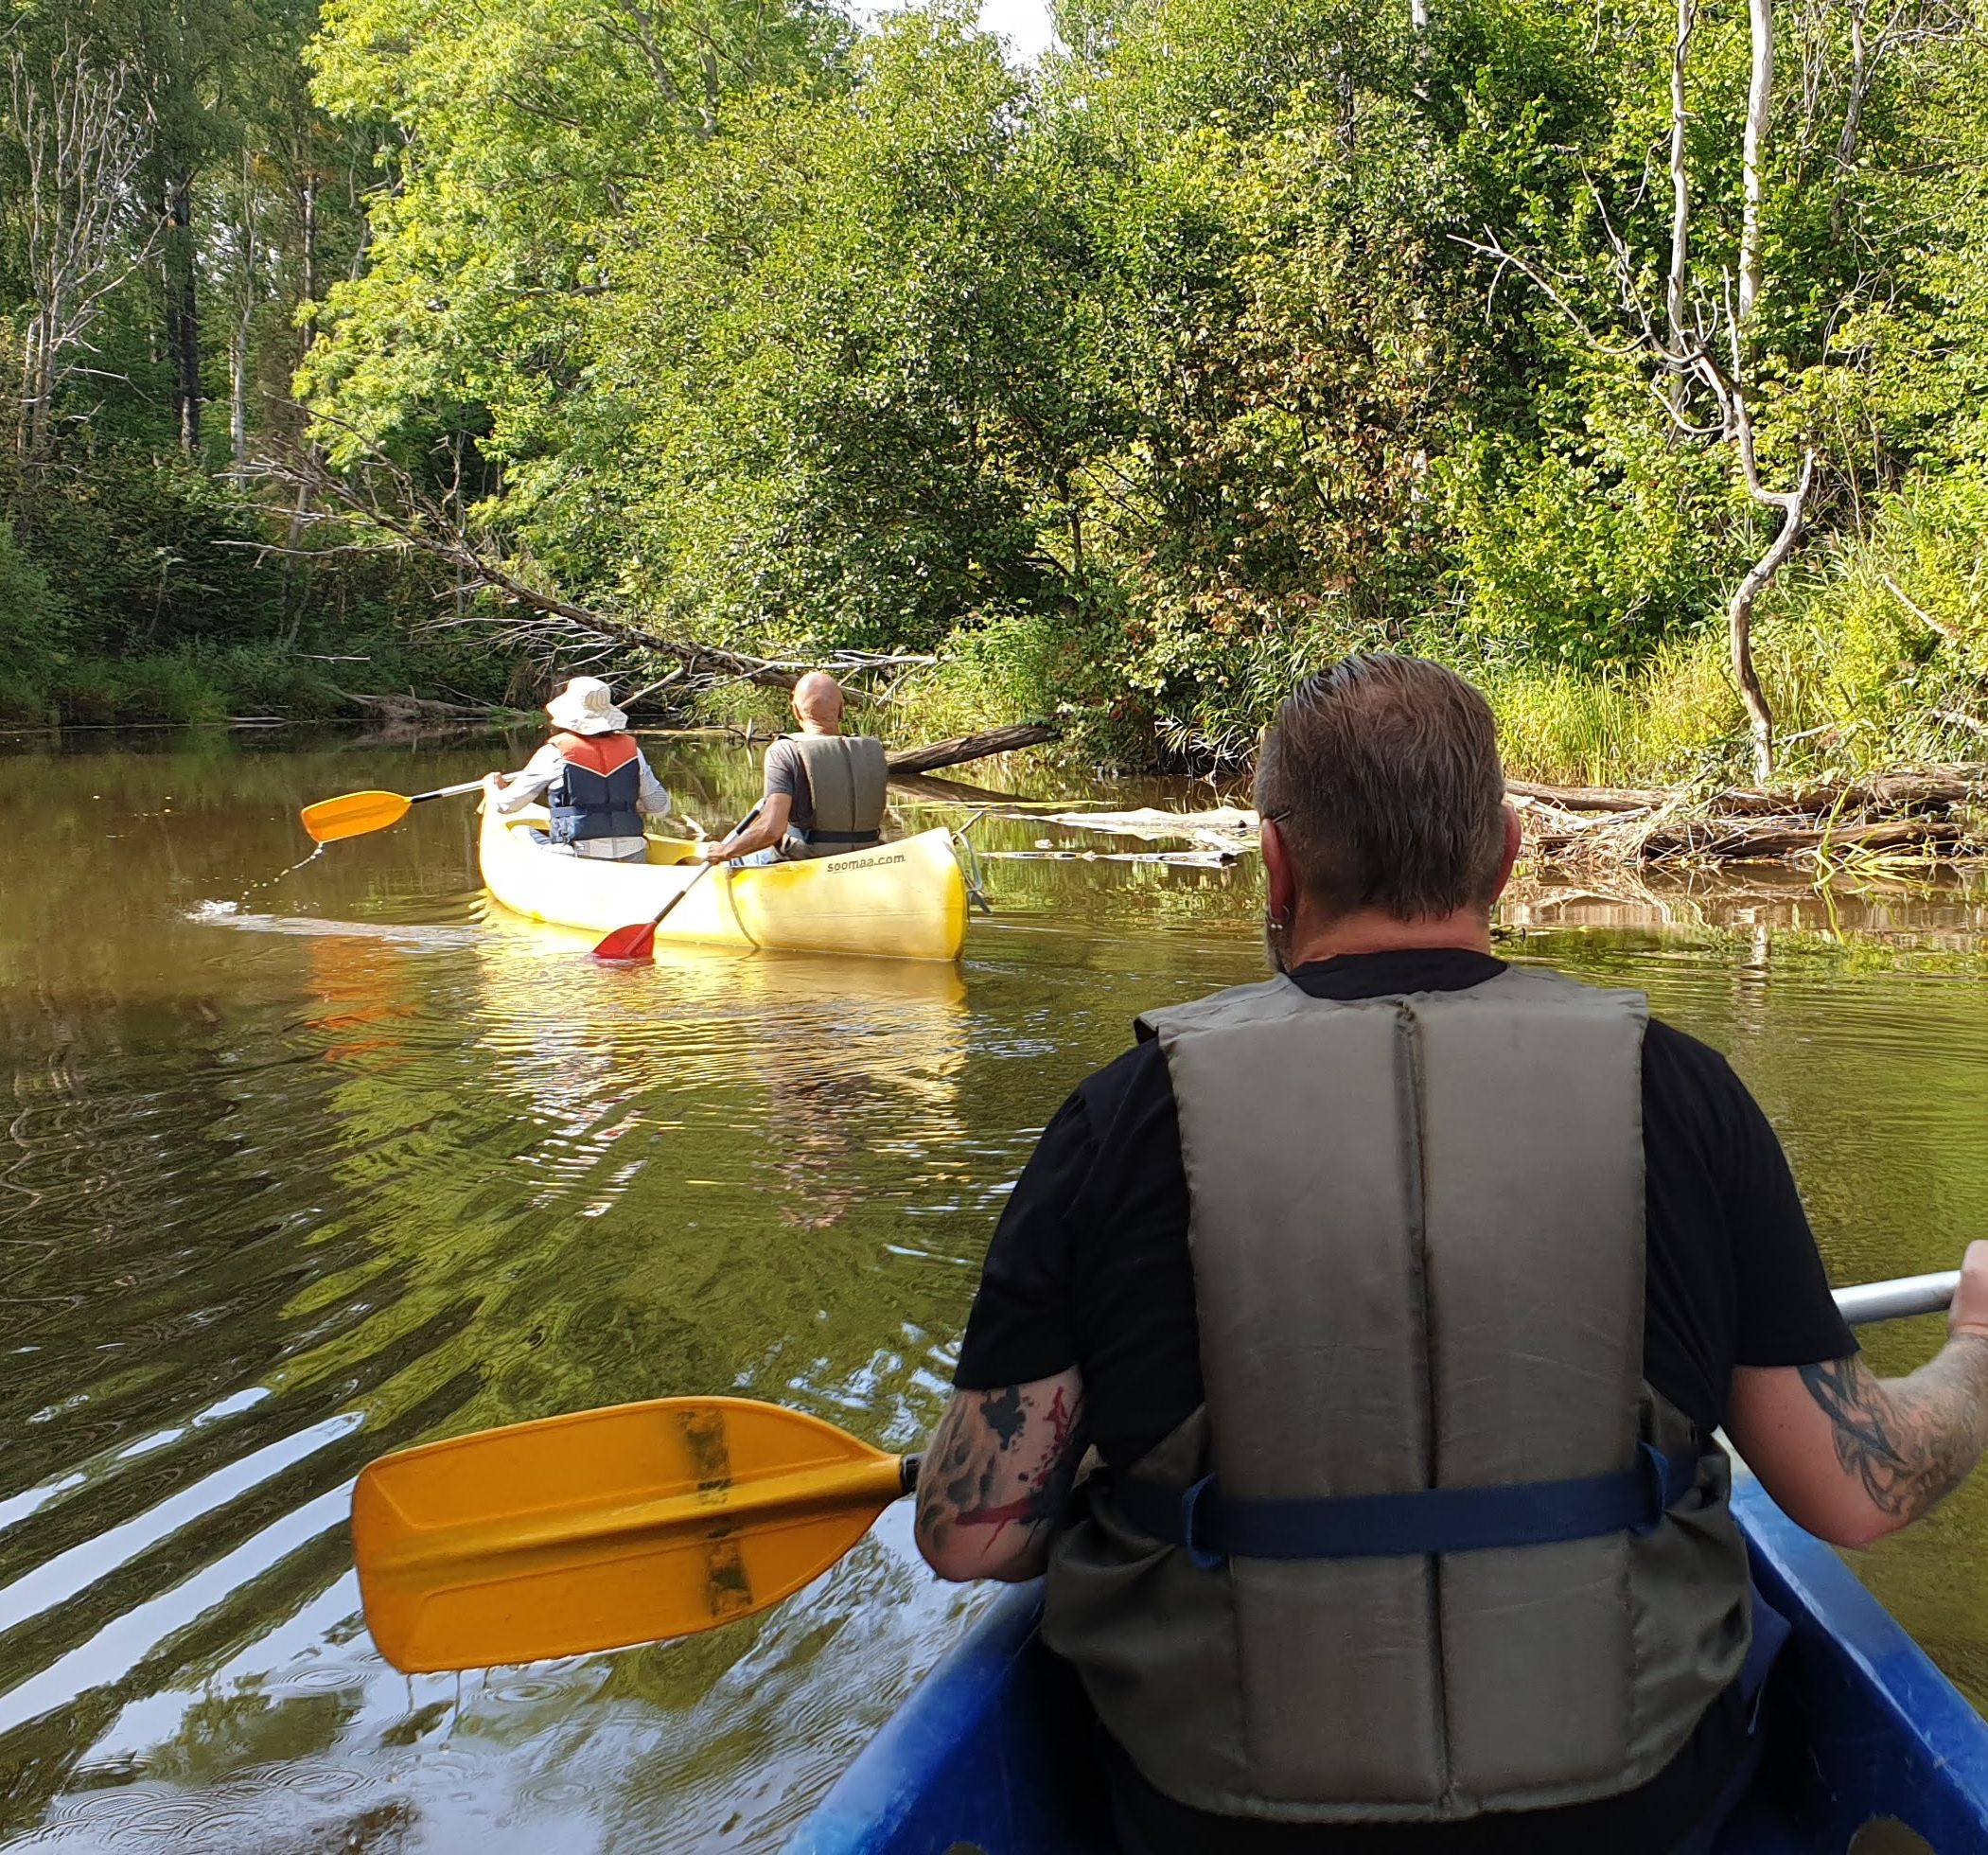 About Soomaa Wilderness Canoe Trips